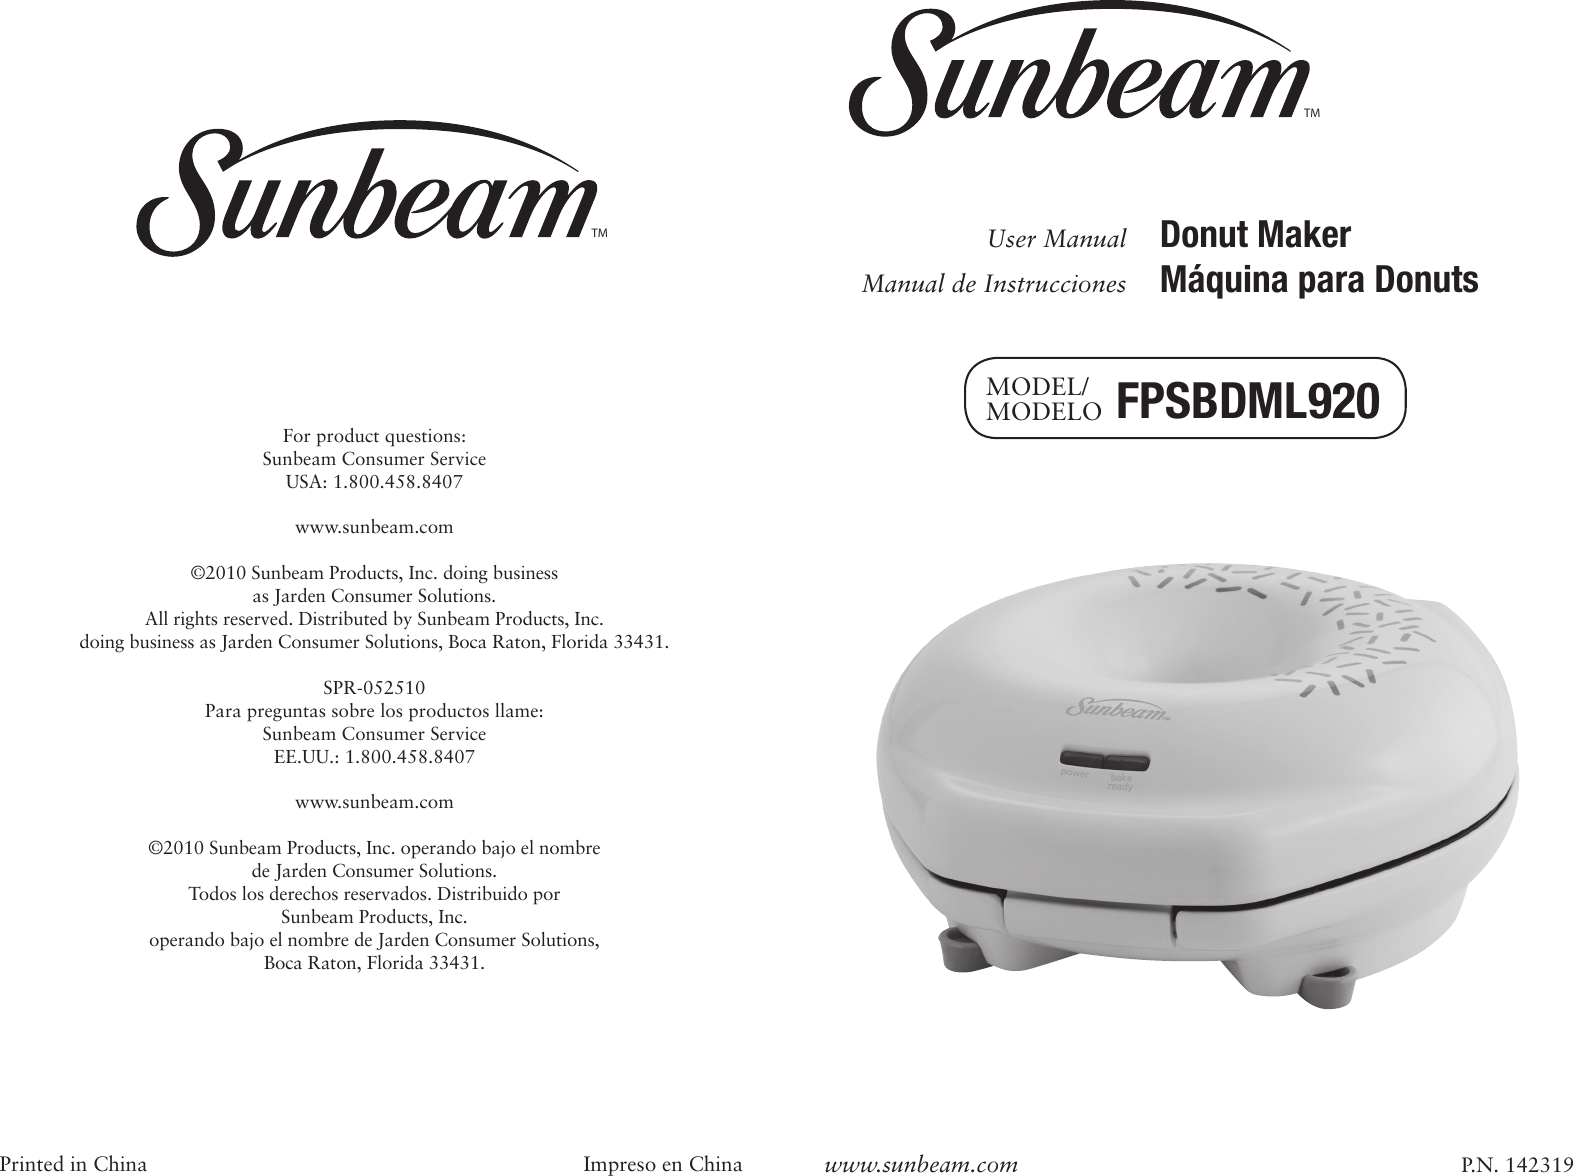 Page 1 of 12 - Sunbeam Sunbeam-Fpsbdml920-Donut-Maker-Instruction-Manual- FPSBCML920_DM_IB  Sunbeam-fpsbdml920-donut-maker-instruction-manual